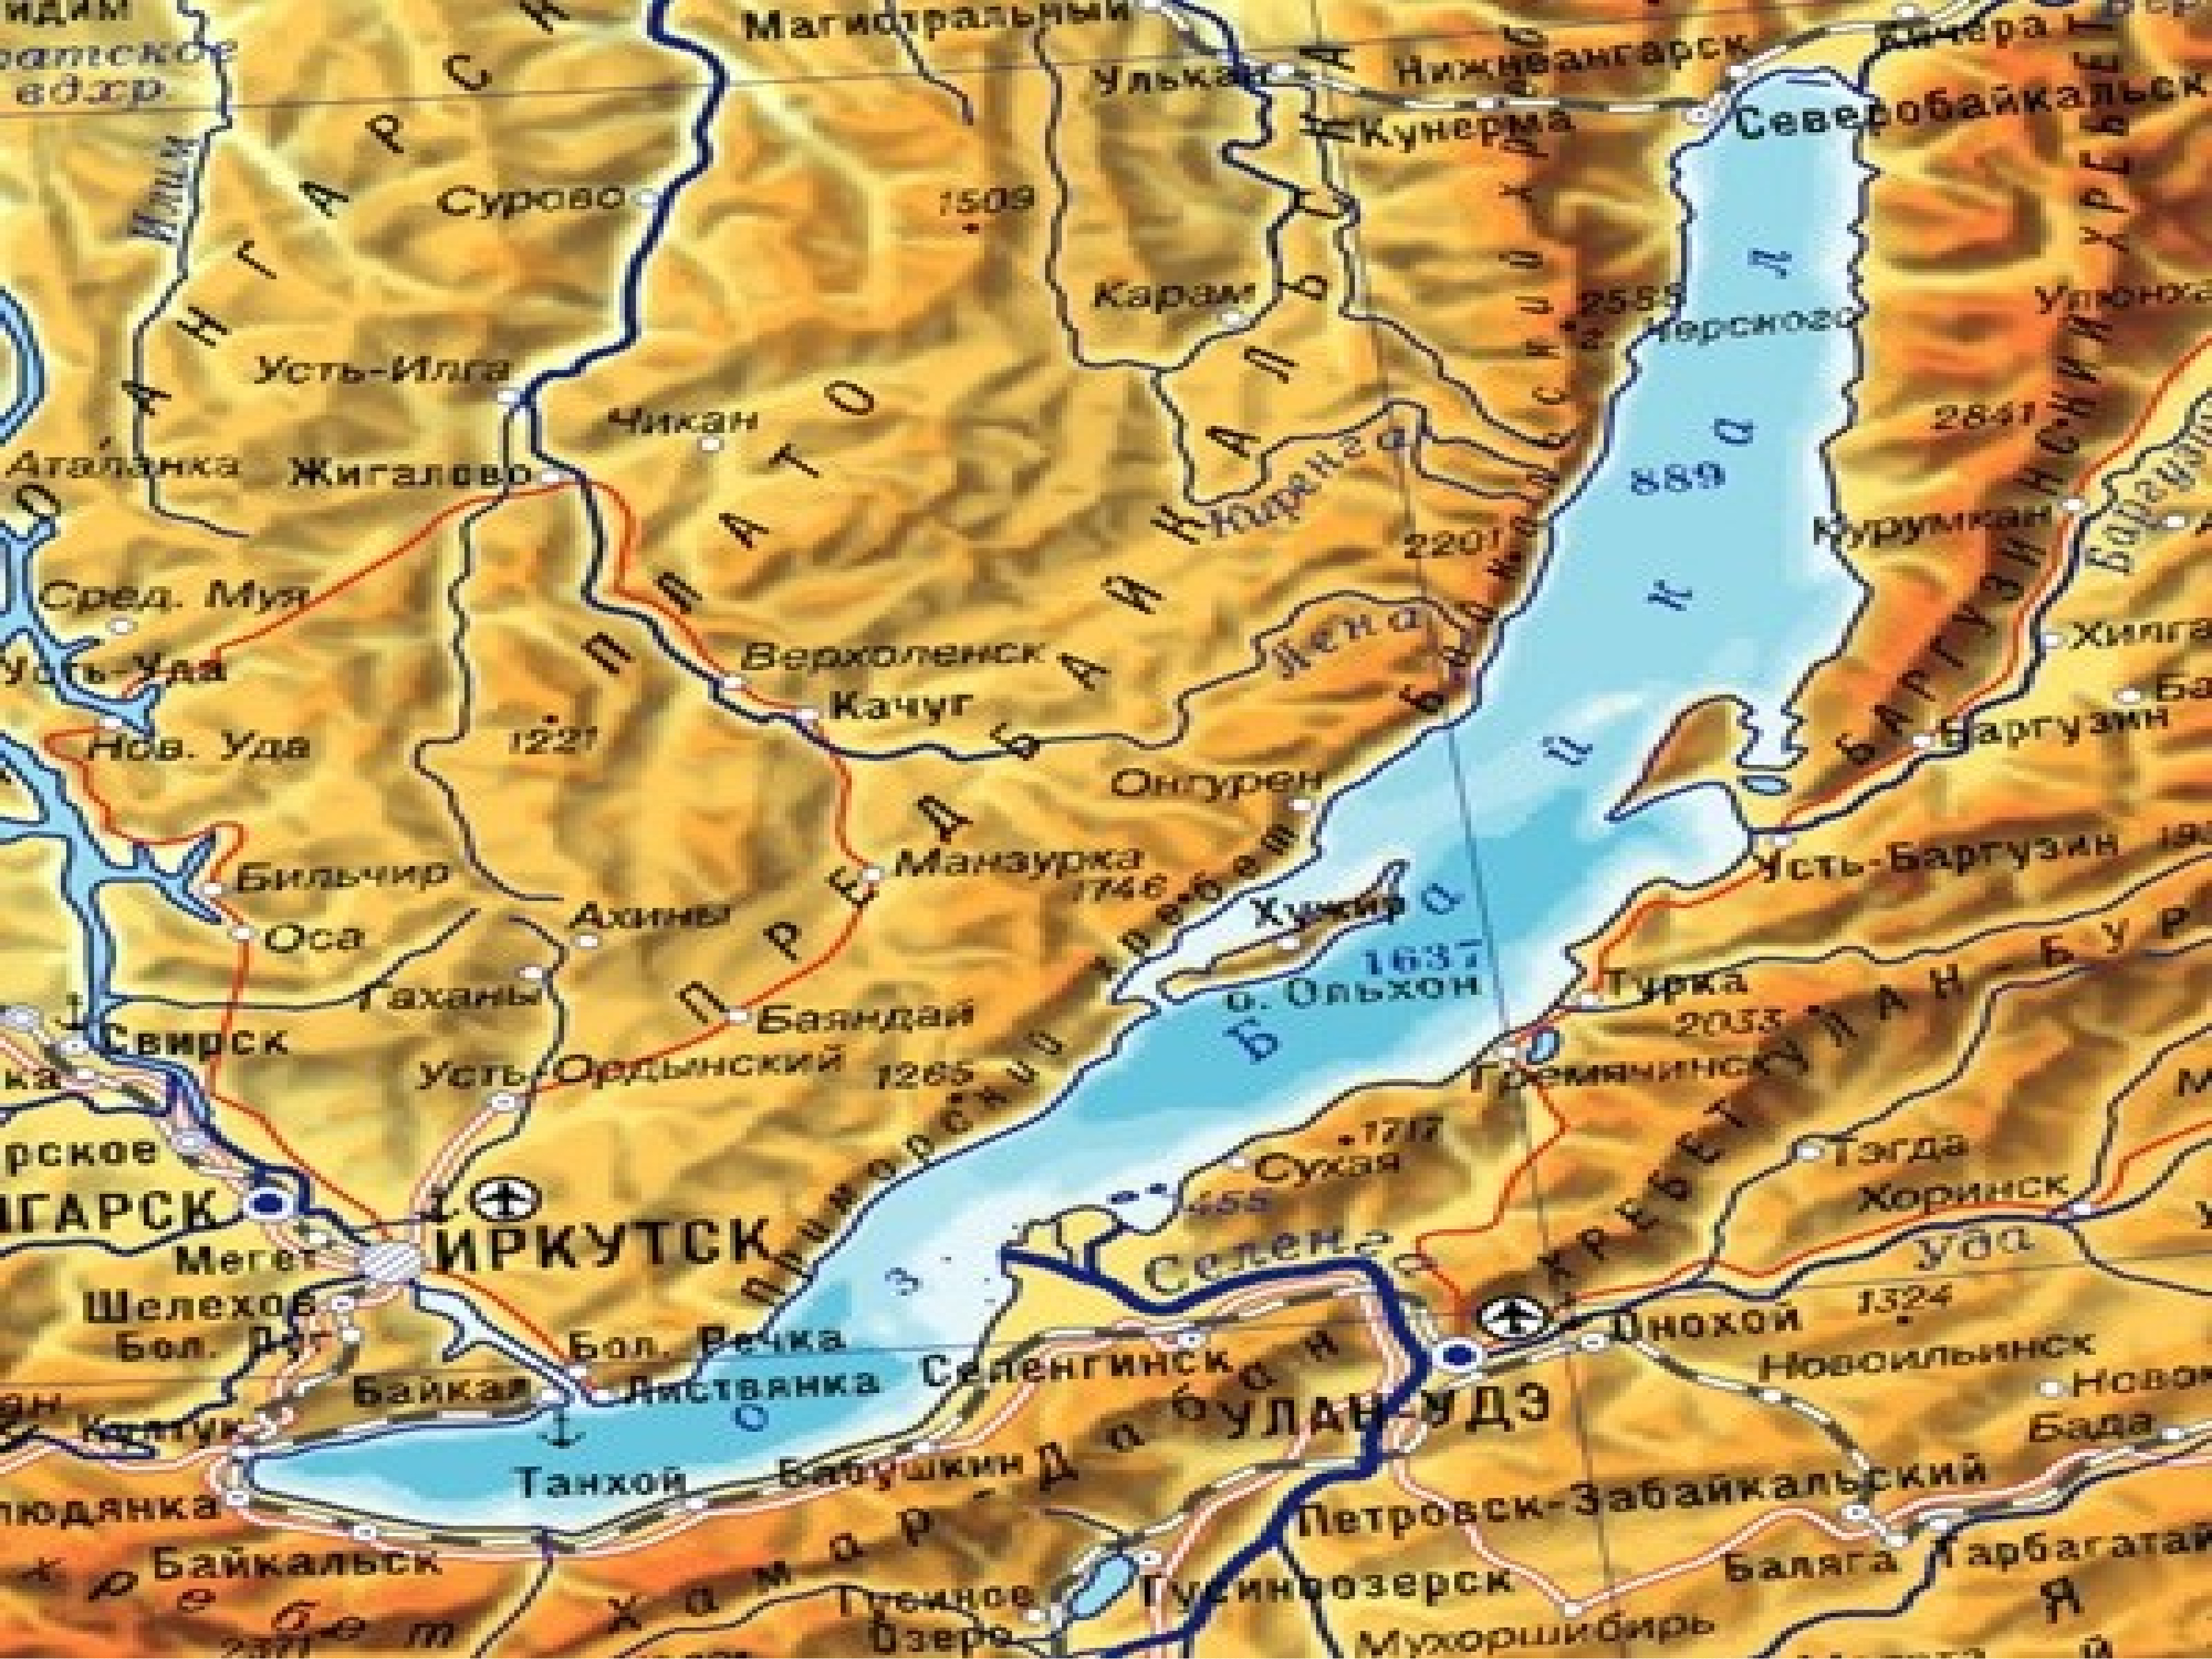 Где находится байкал страна. Озеро Байкал на карте. Озеро Байкал карта географическая. Географическое положение озера Байкал. Карта озеро Байкал на карте.